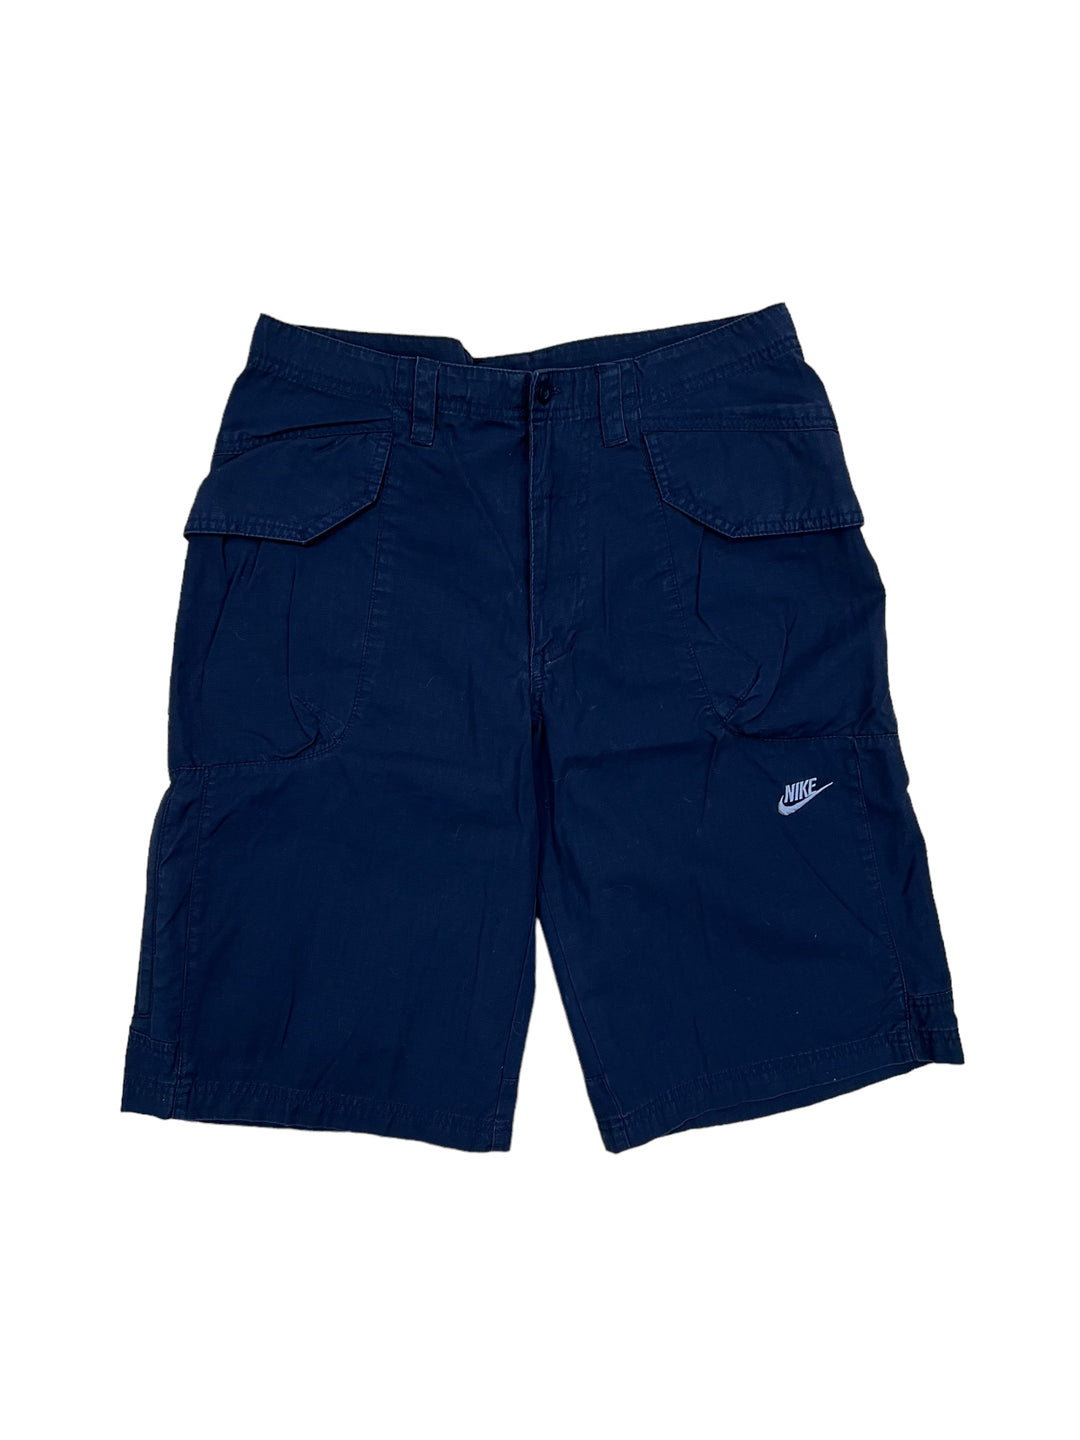 Nike vintage navy shorts men’s small